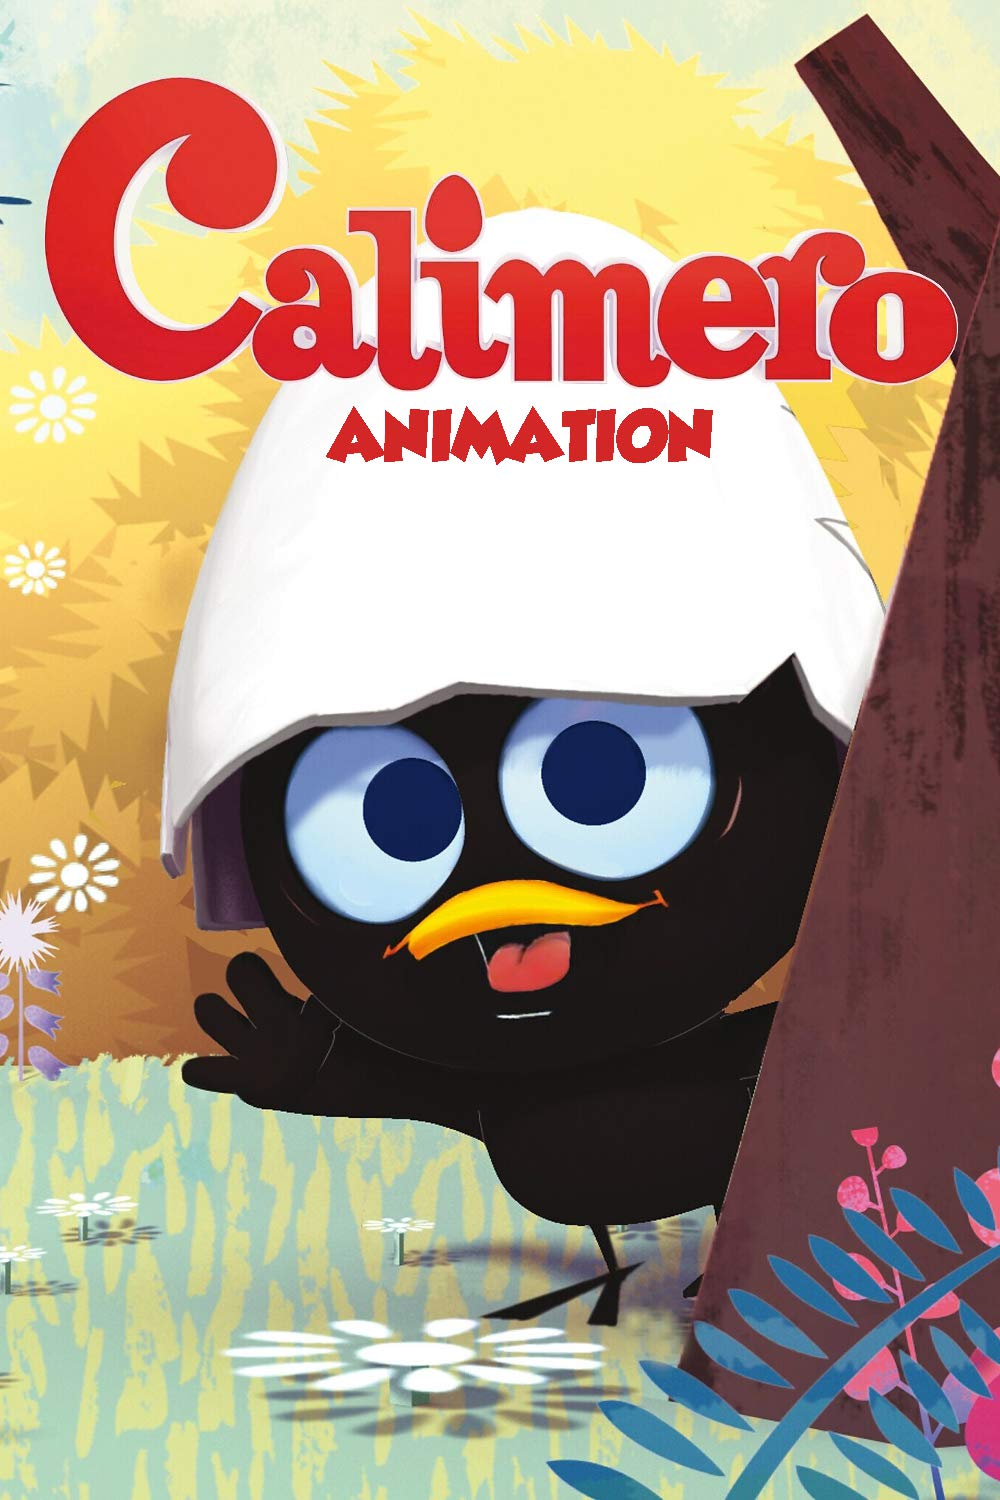 Calimero: Animation